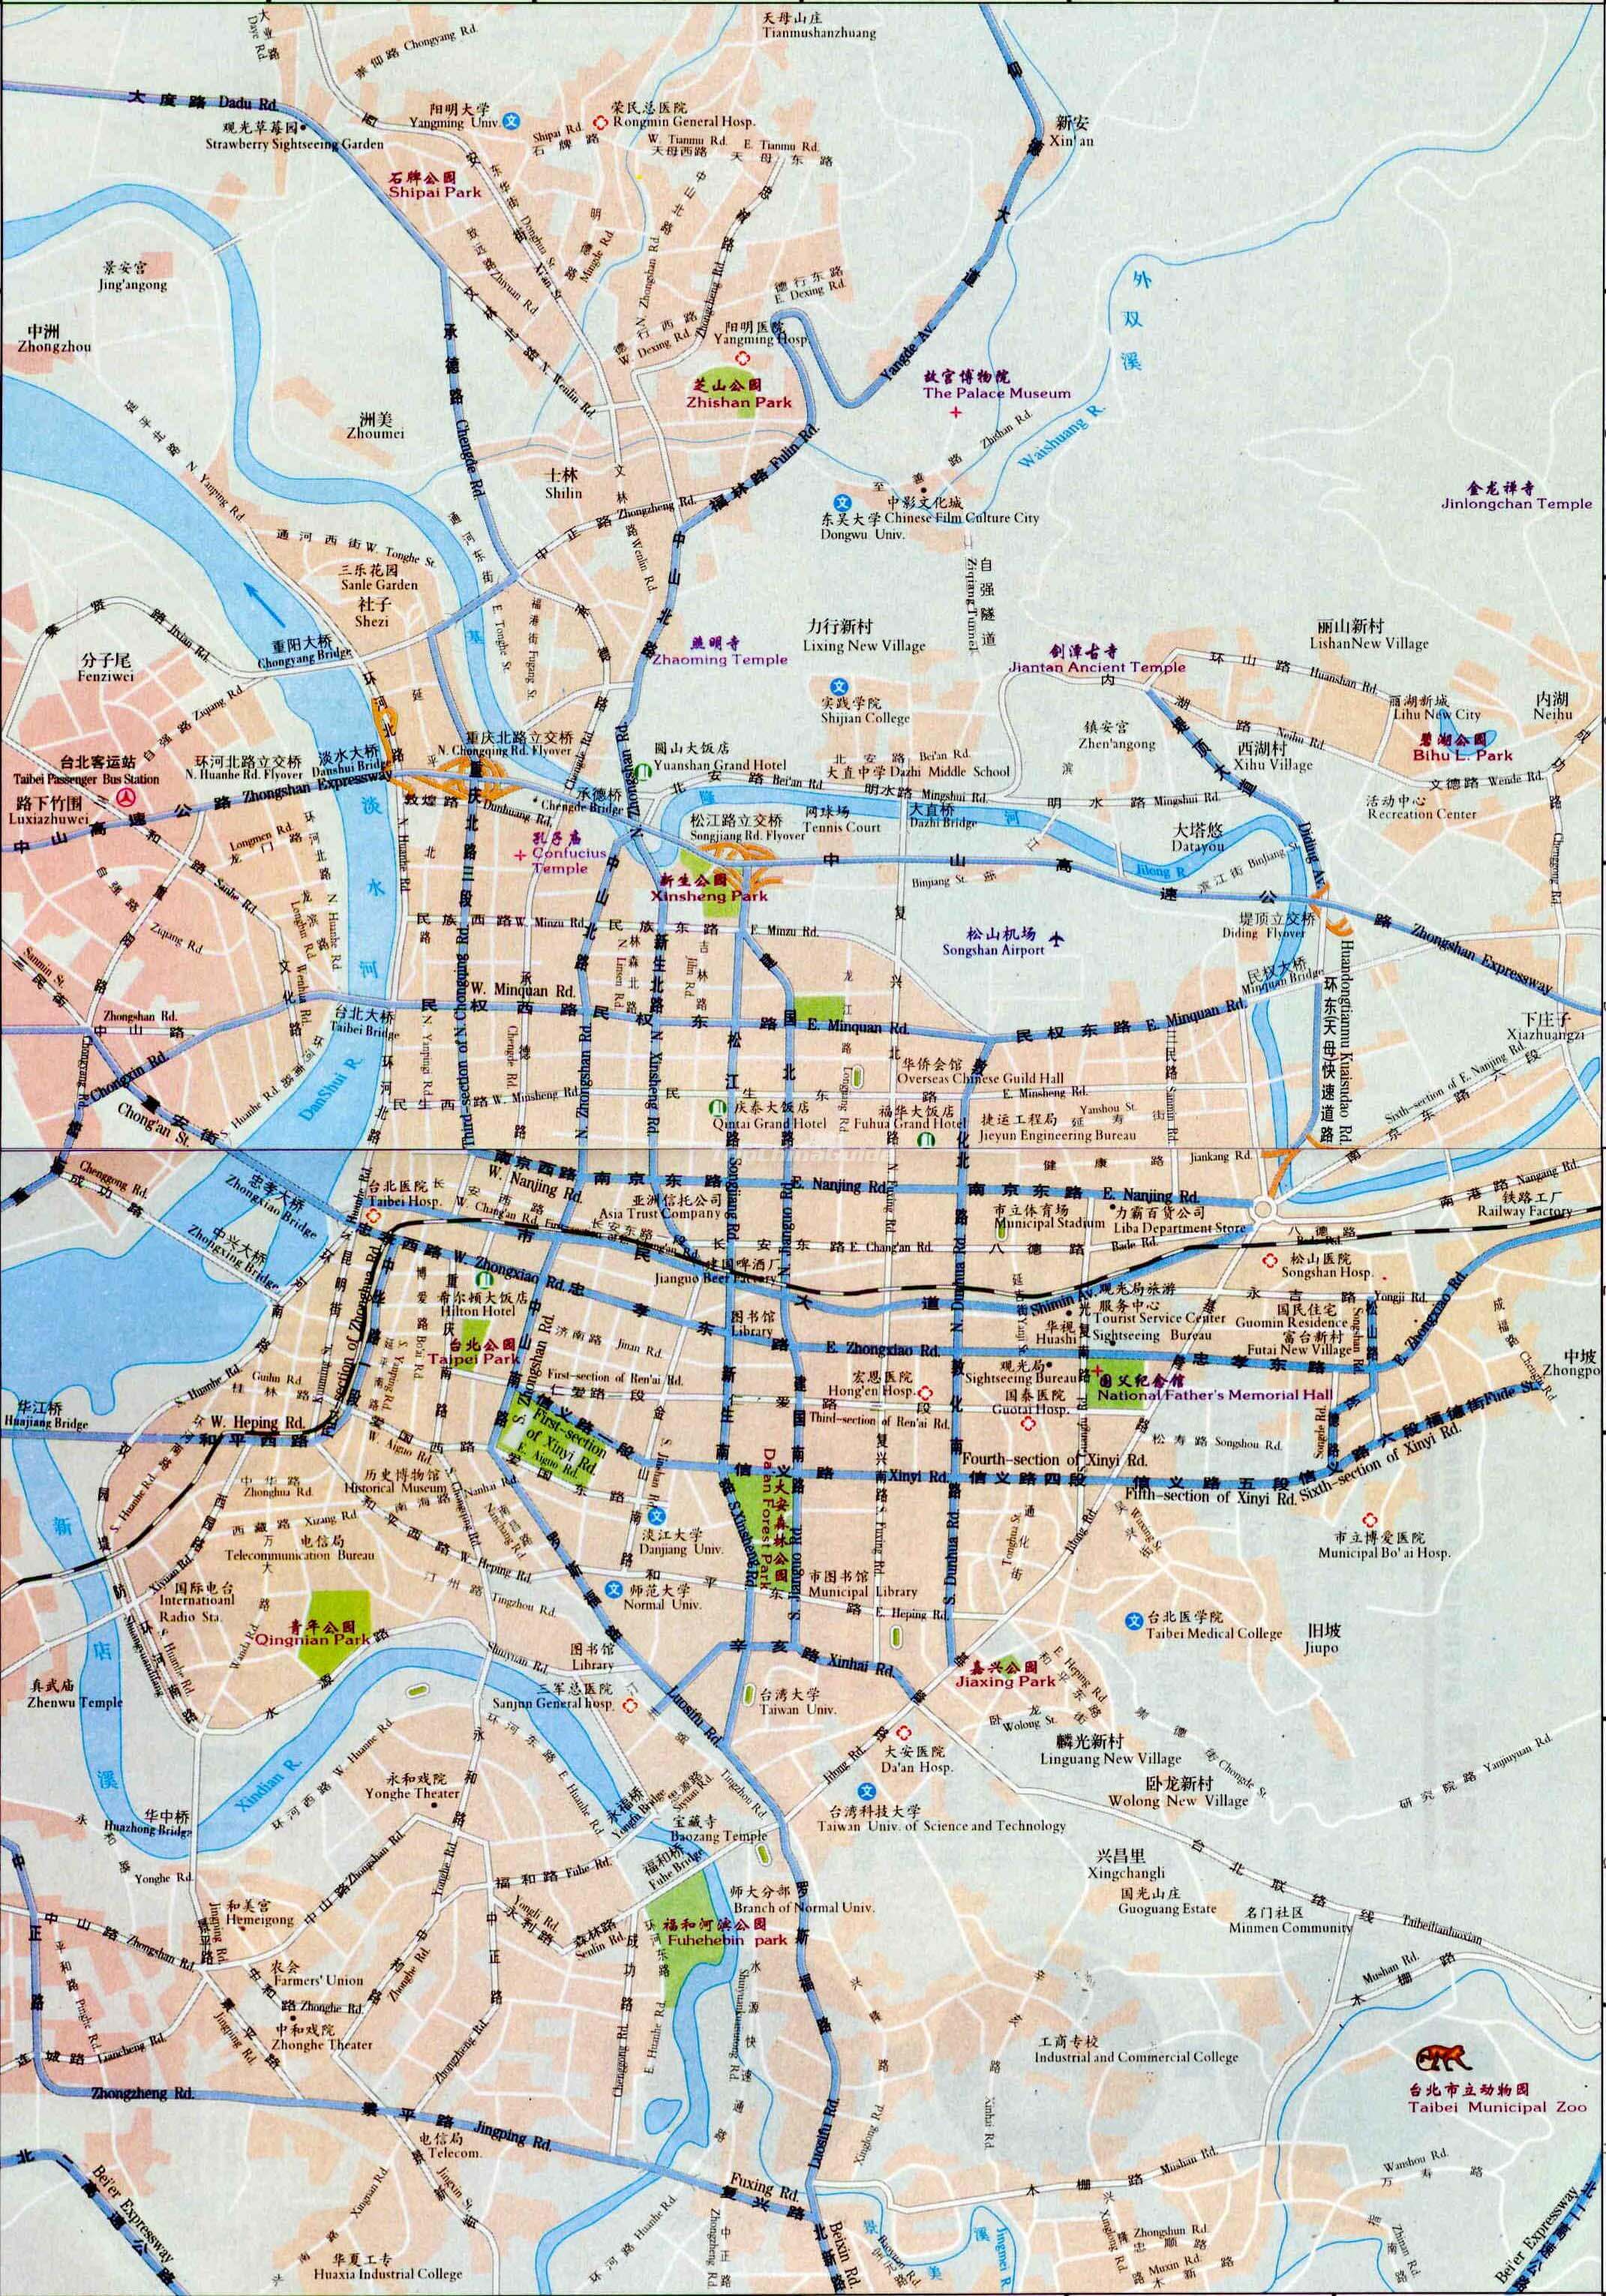 Carte detaillee de Taipei